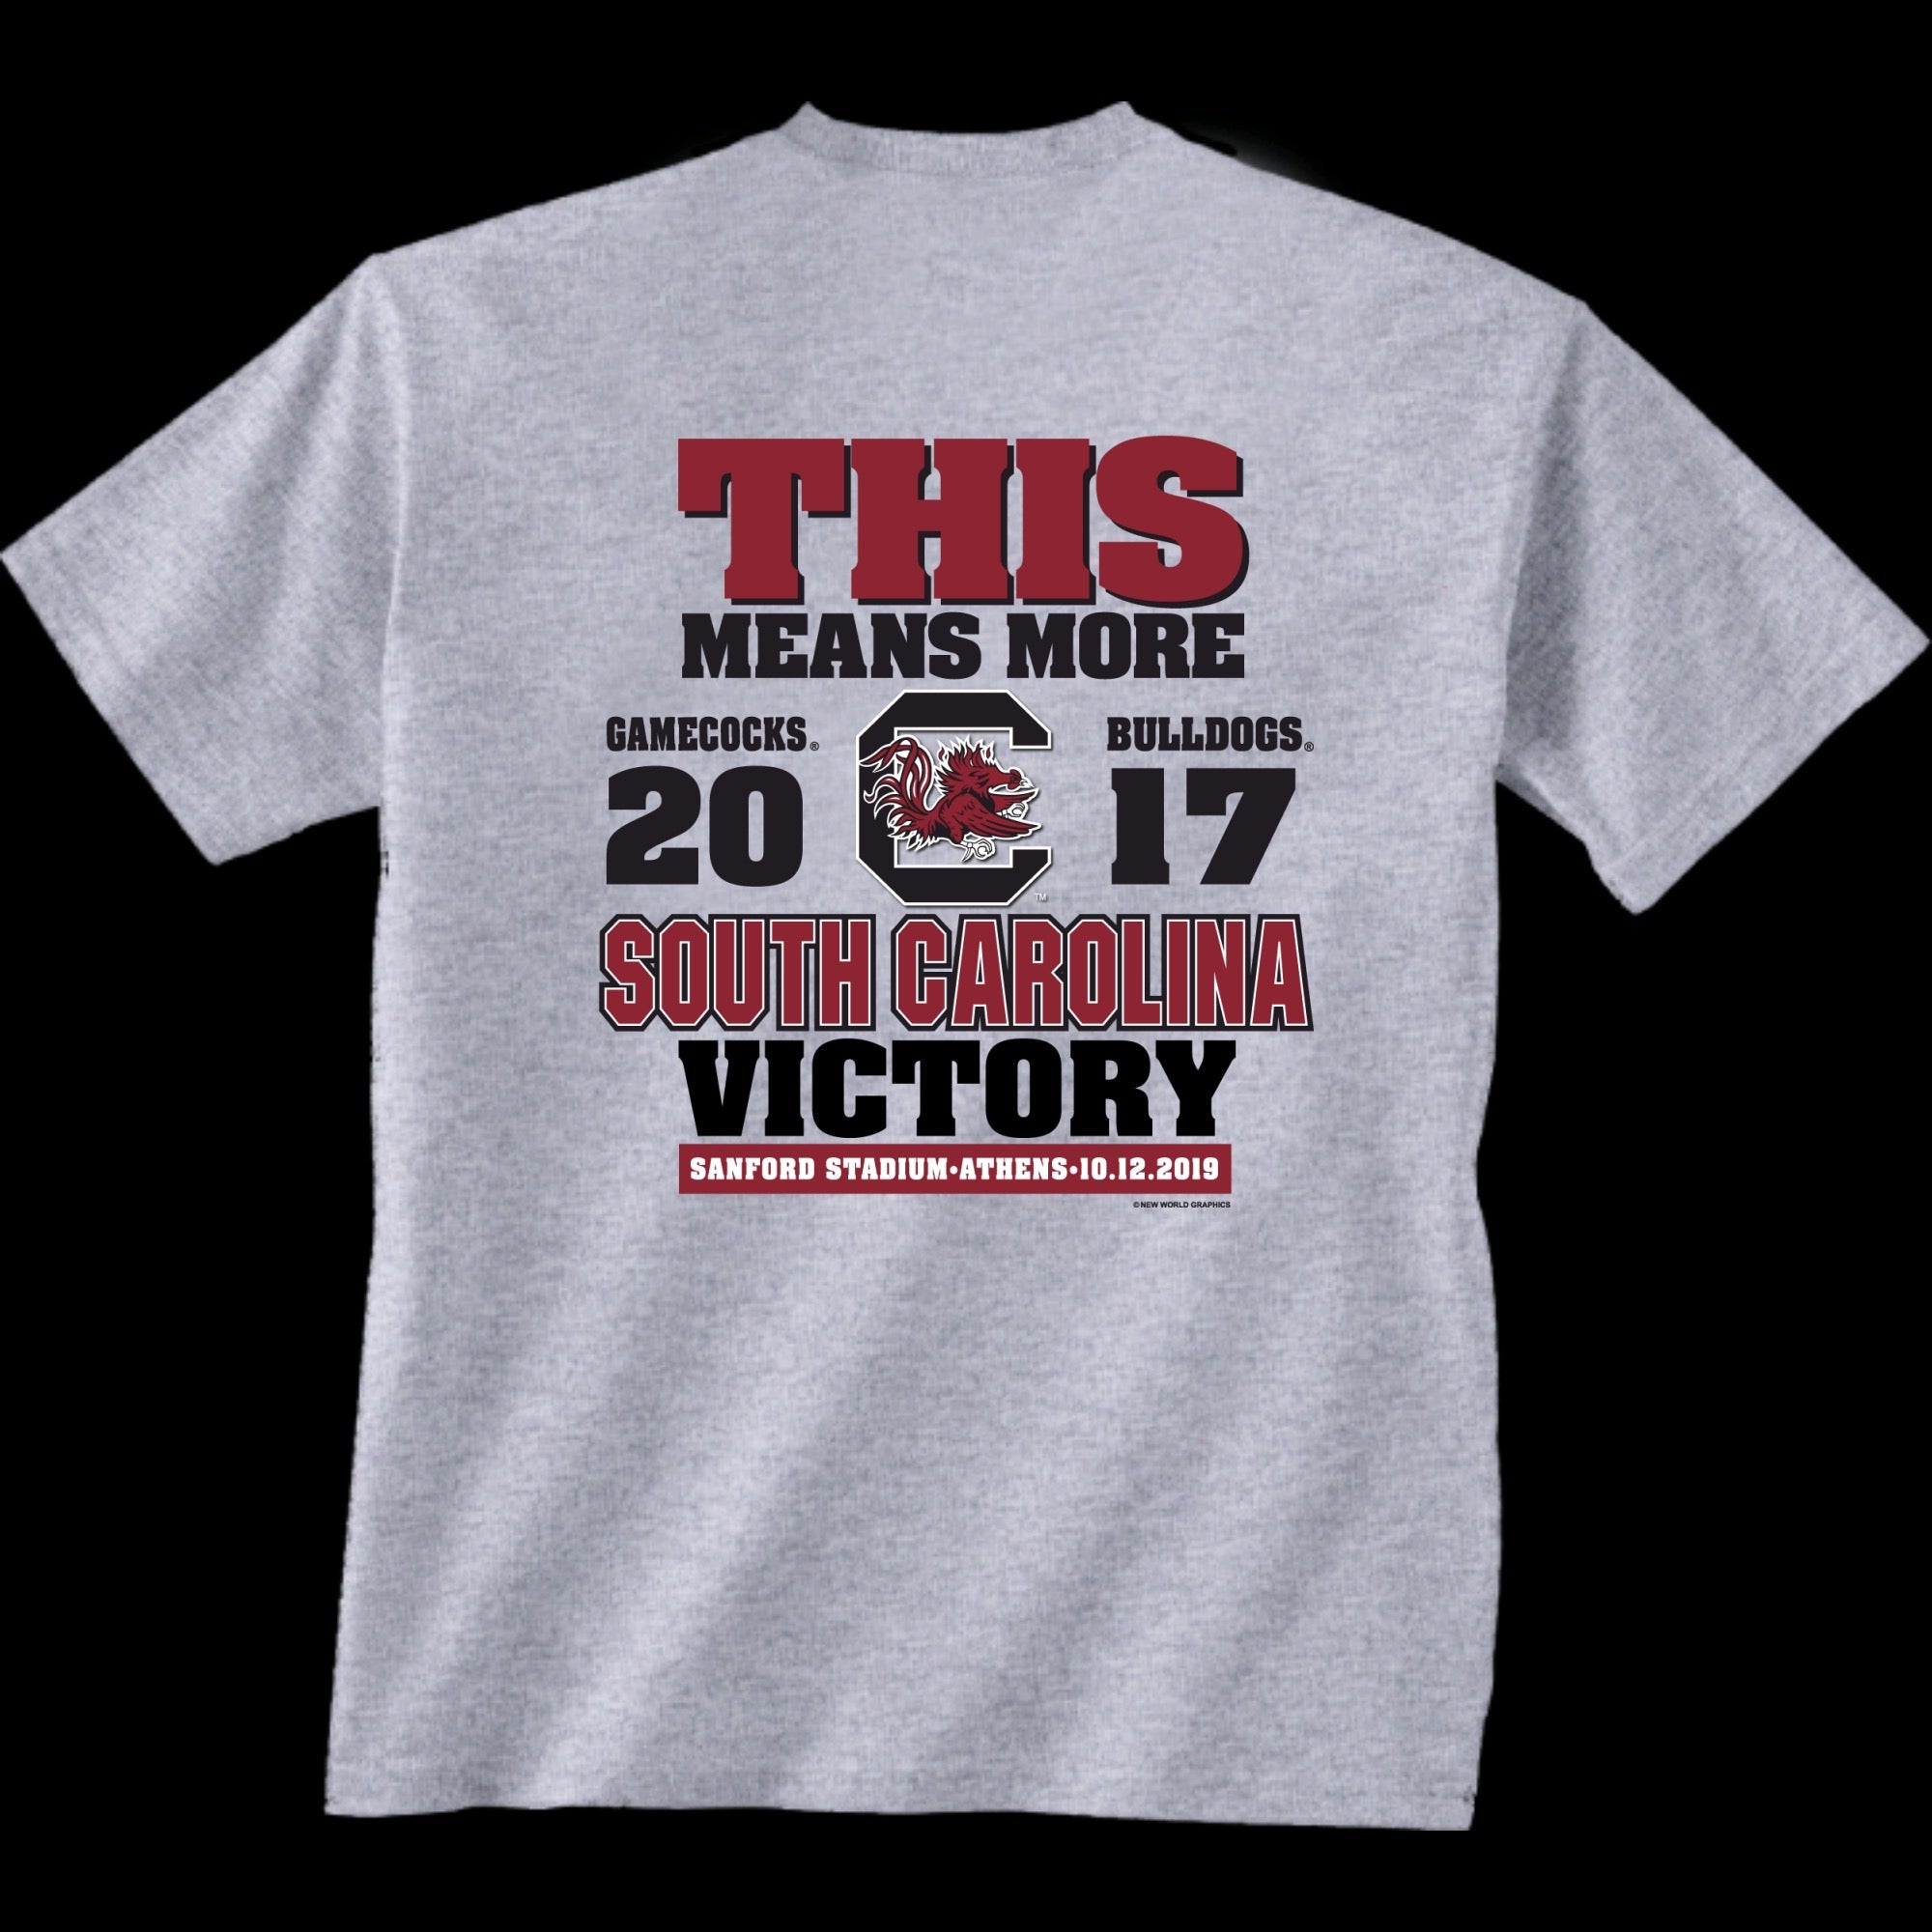 South Carolina "Victory" T-shirt